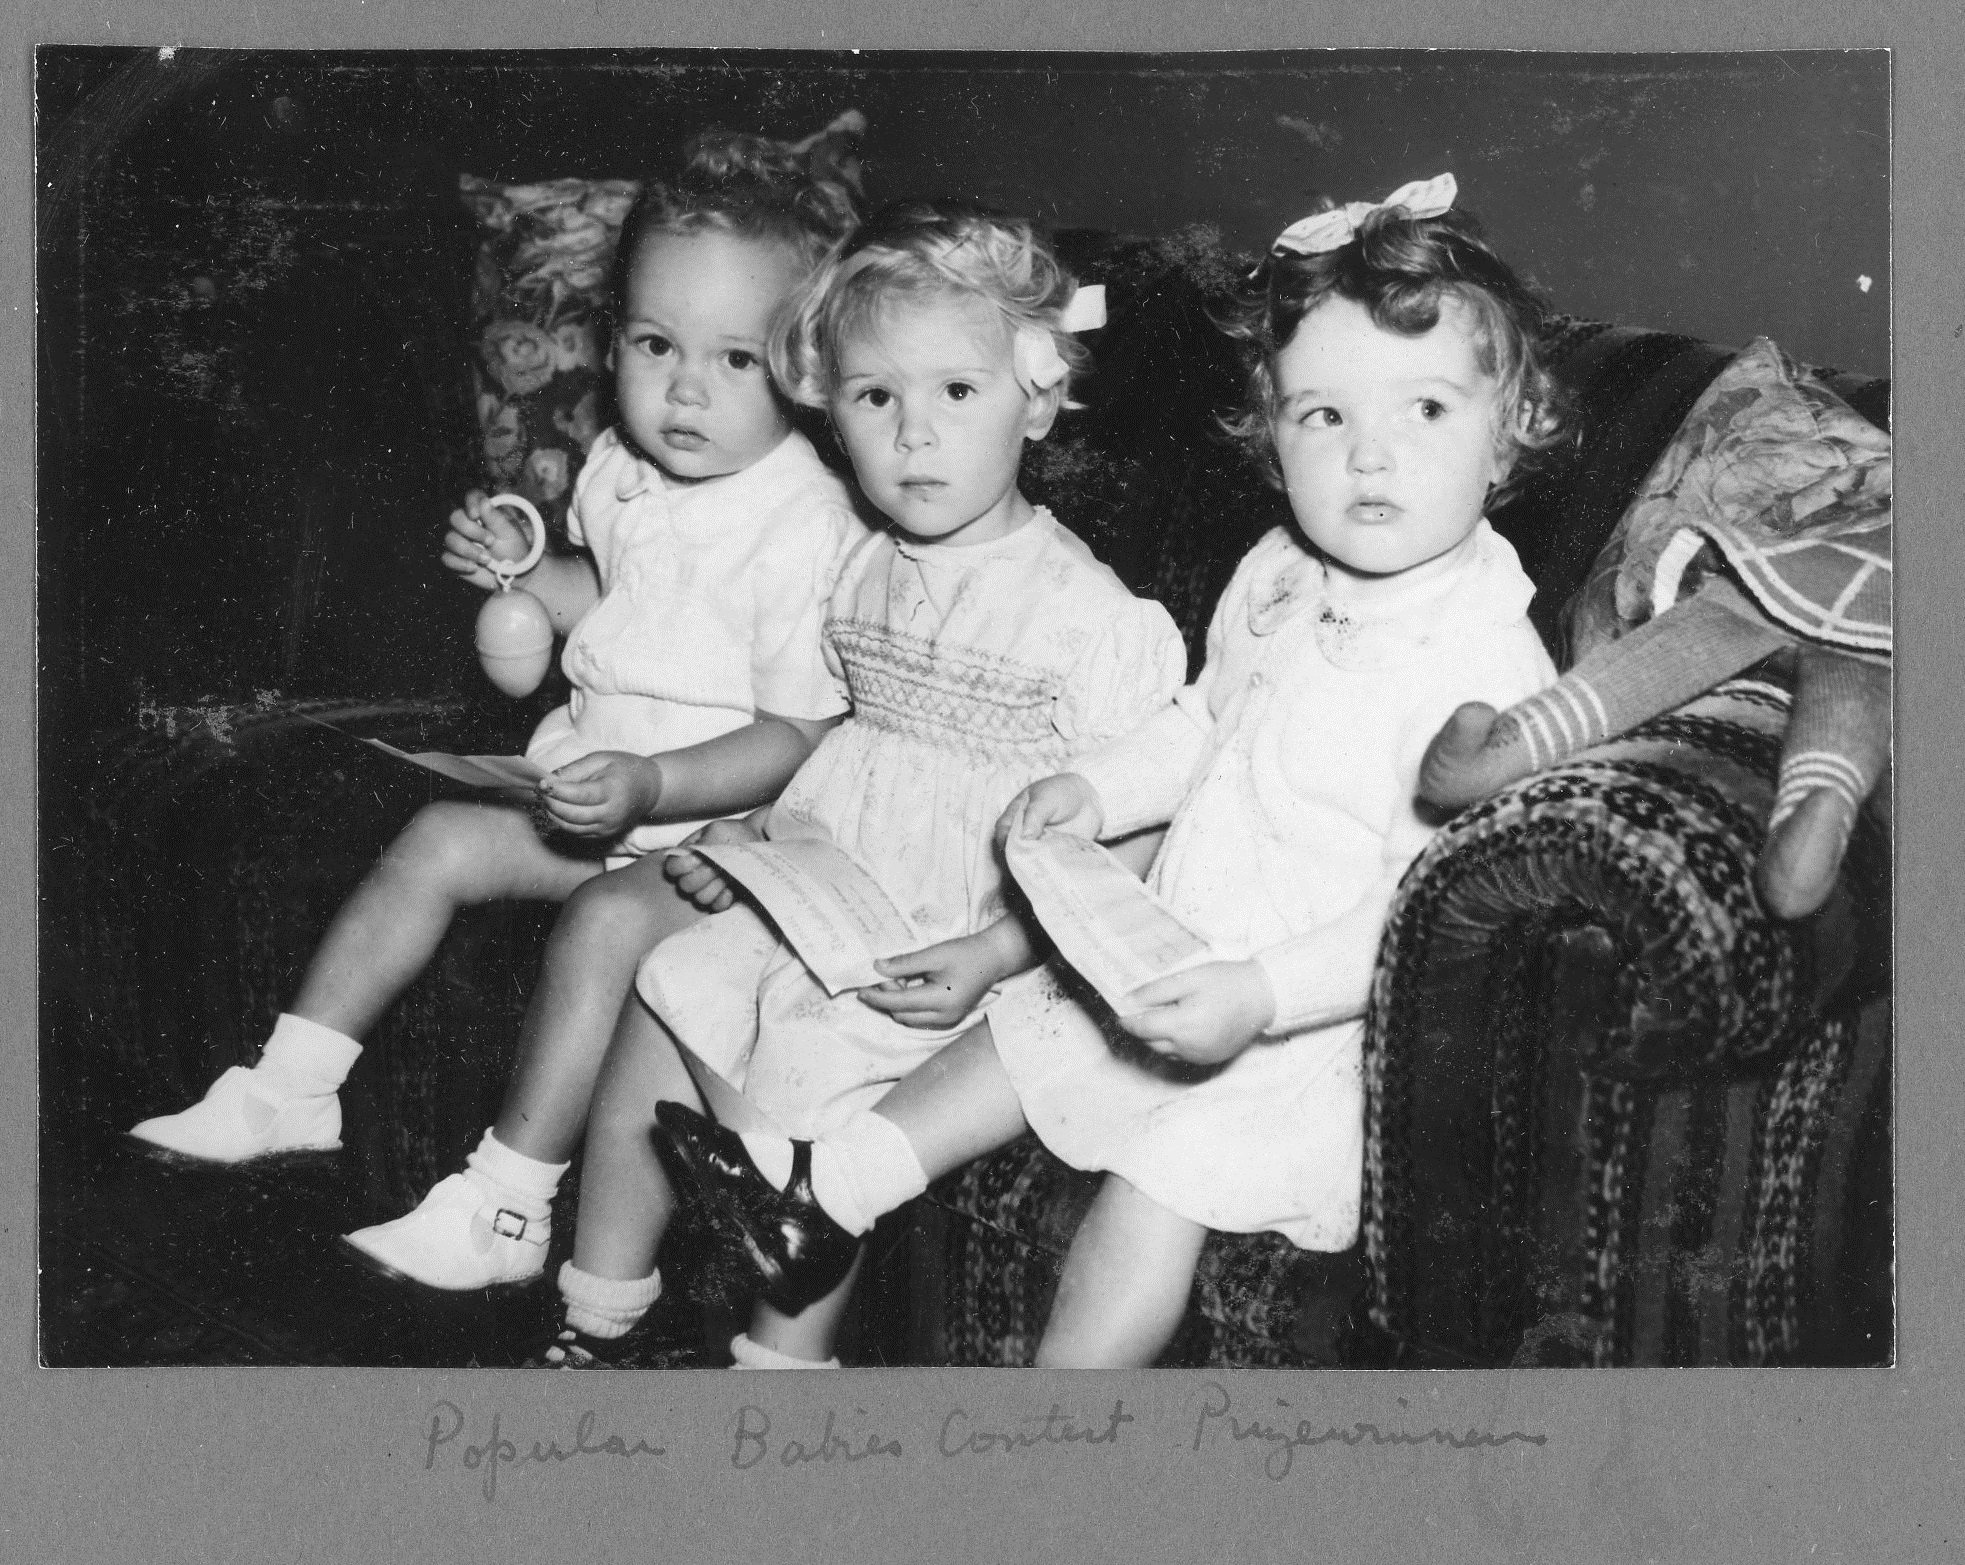 1940-50 - KC - Popular Babies Contest